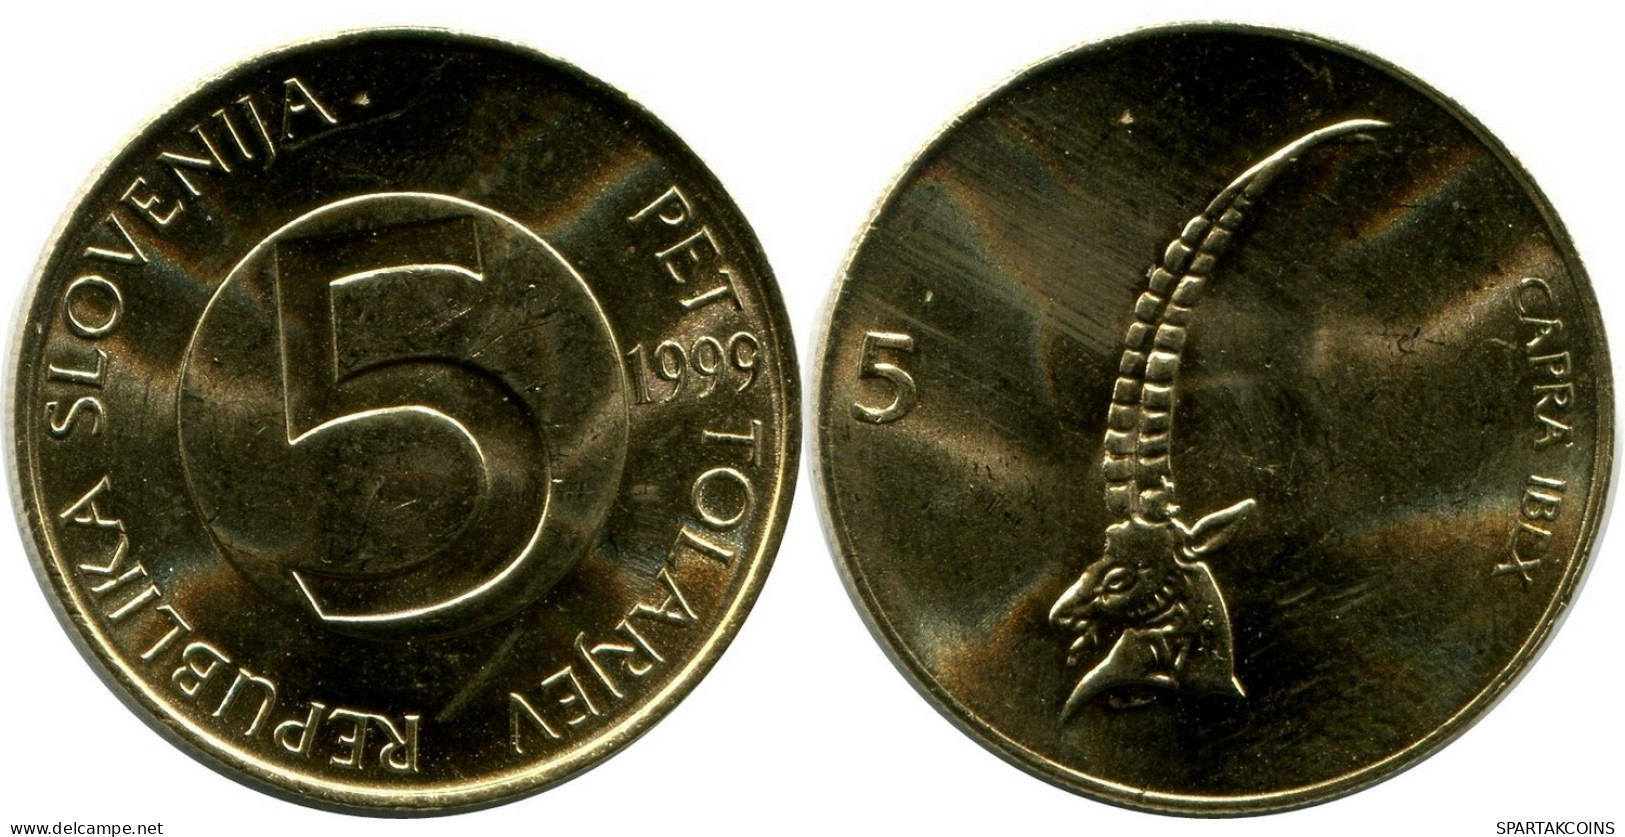 5 TOLAR 1999 SLOVENIA UNC Head Capricorn Coin #M10216.U - Slovenia